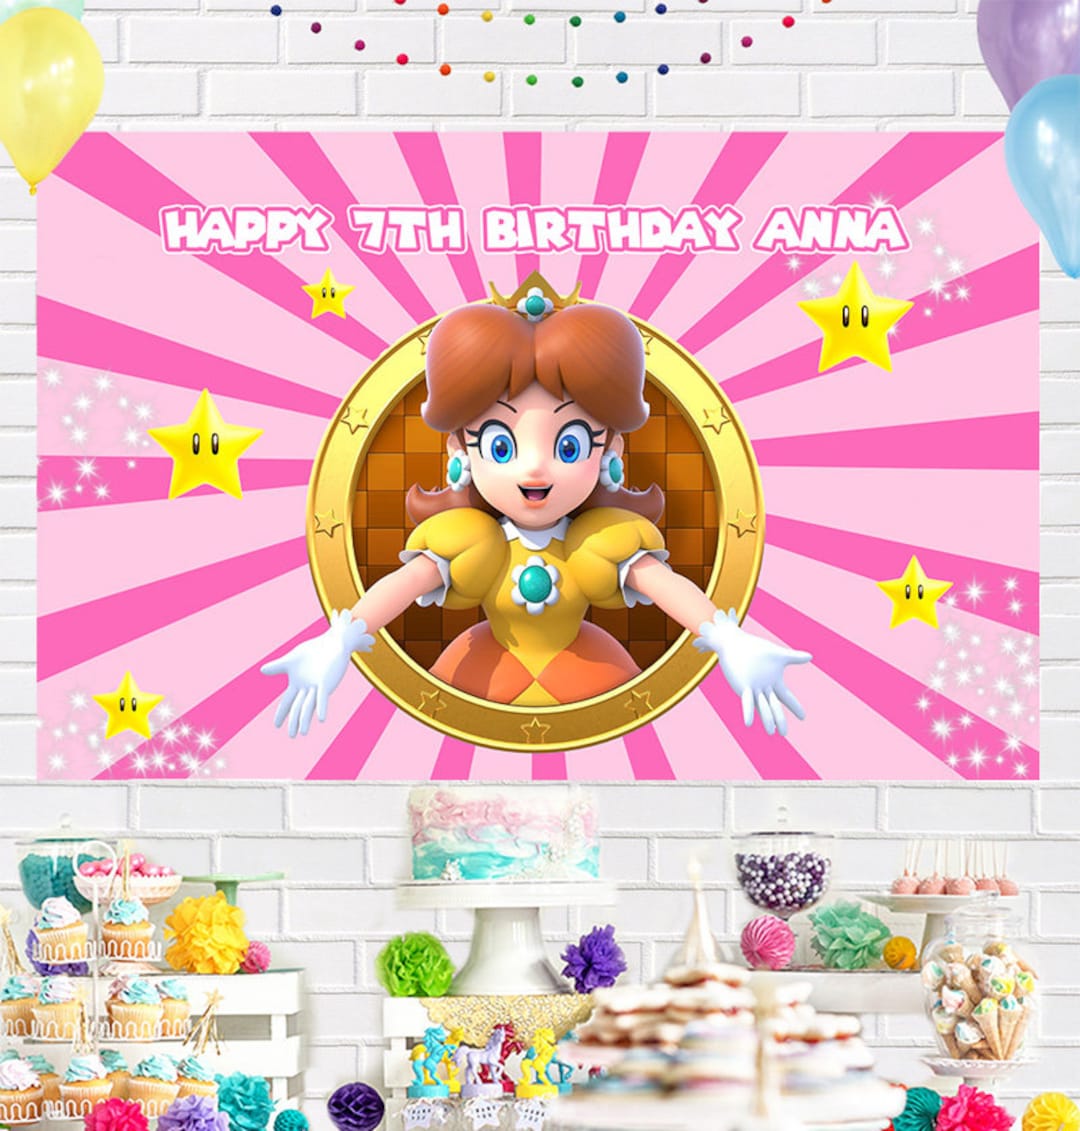 Super Mario Gold Coin Video Game Happy Birthday Theme Photography Backdrops  5x3ft Children Boys Birthday Party Decor Supplies Cake Table Decor Kids